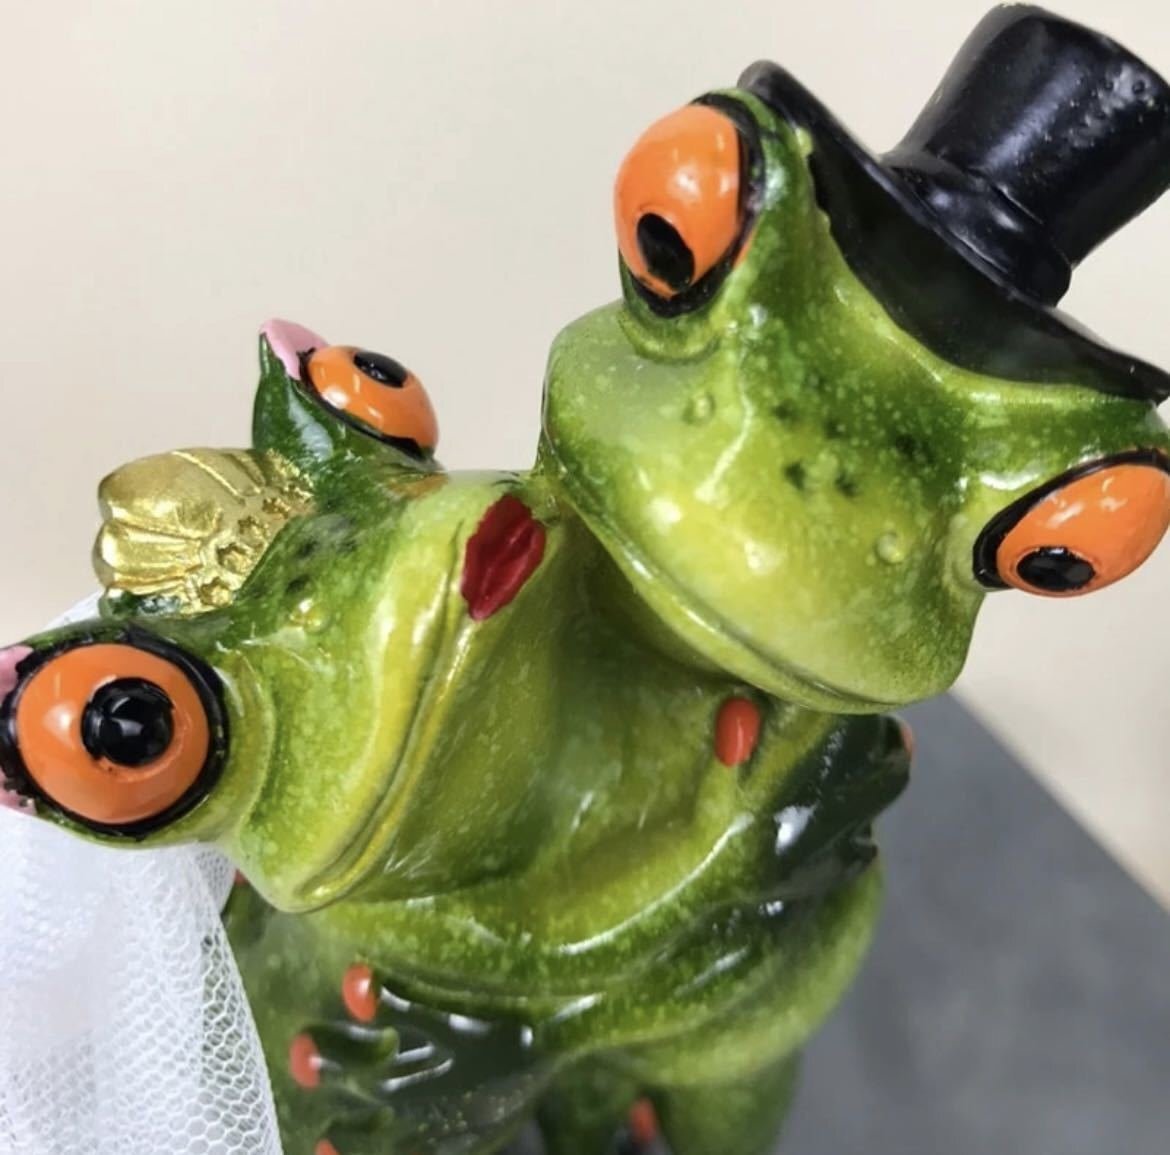 LHH404★結婚 樹脂 蛙 カエルの置物 カップル カエル フィギュア 雑貨 置物 オーナメント インテリア 小物 雑貨 ユニーク 可愛い 装飾_画像3